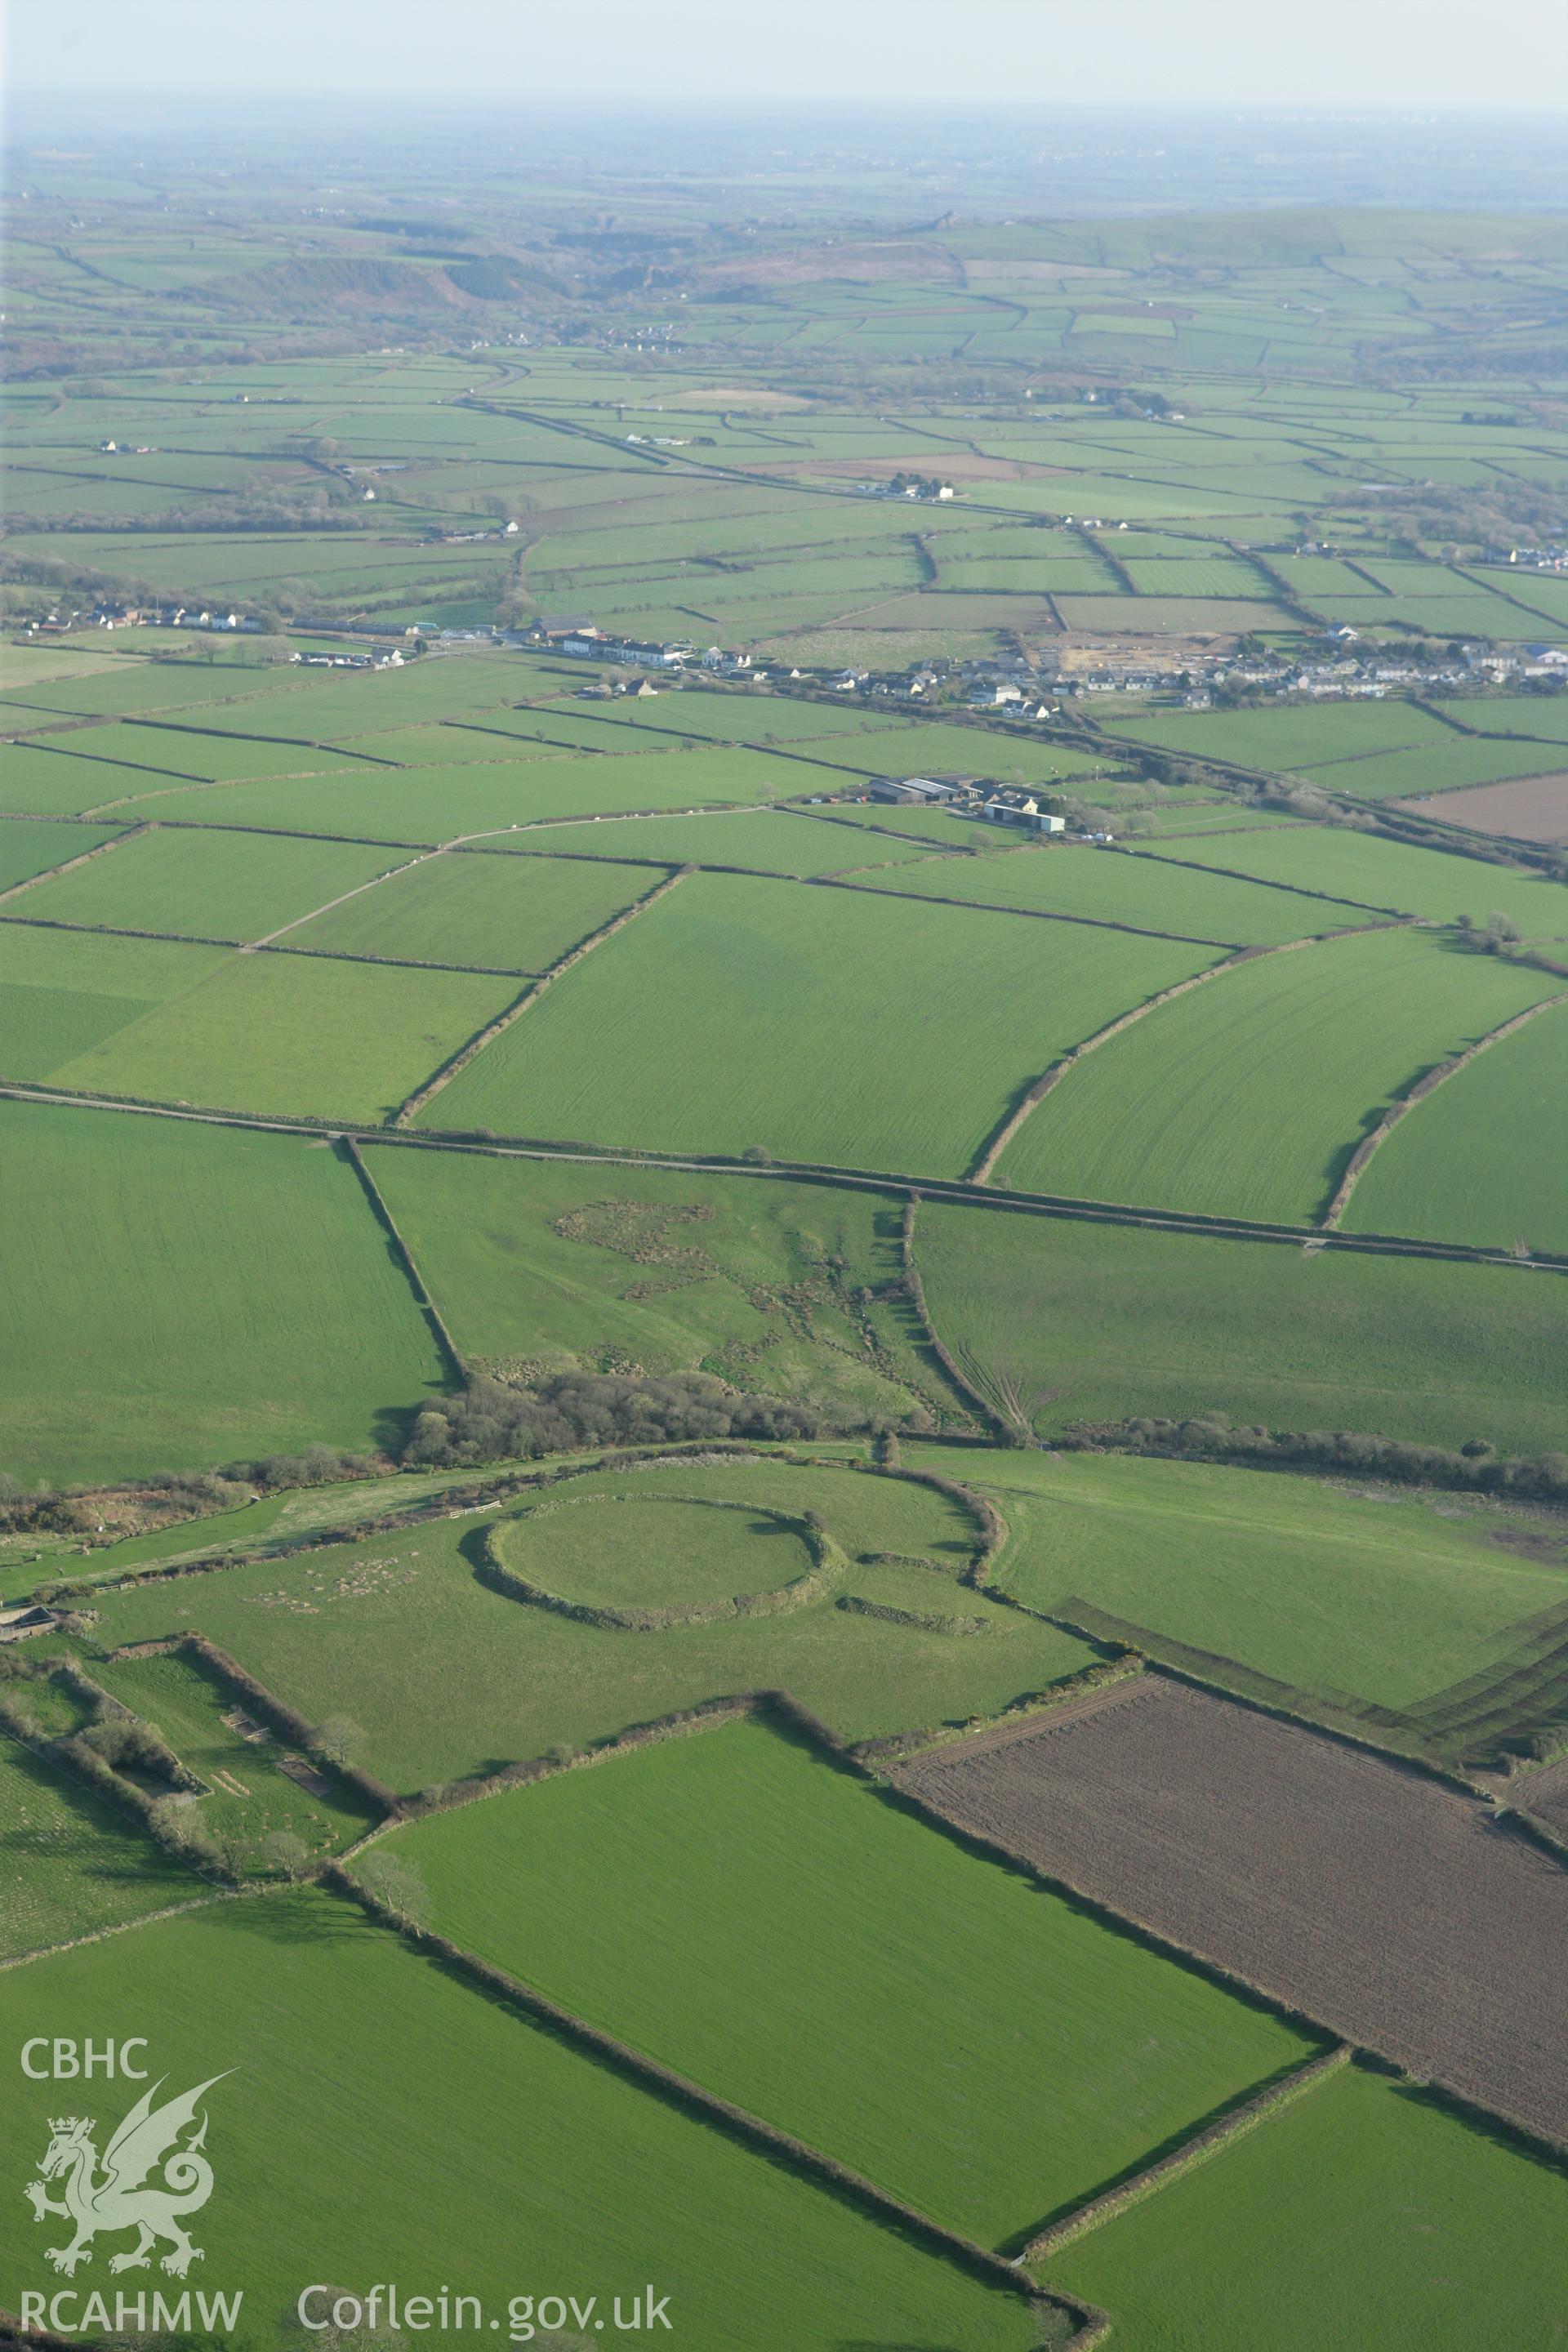 RCAHMW colour oblique aerial photograph of Castle Bucket. Taken on 13 April 2010 by Toby Driver